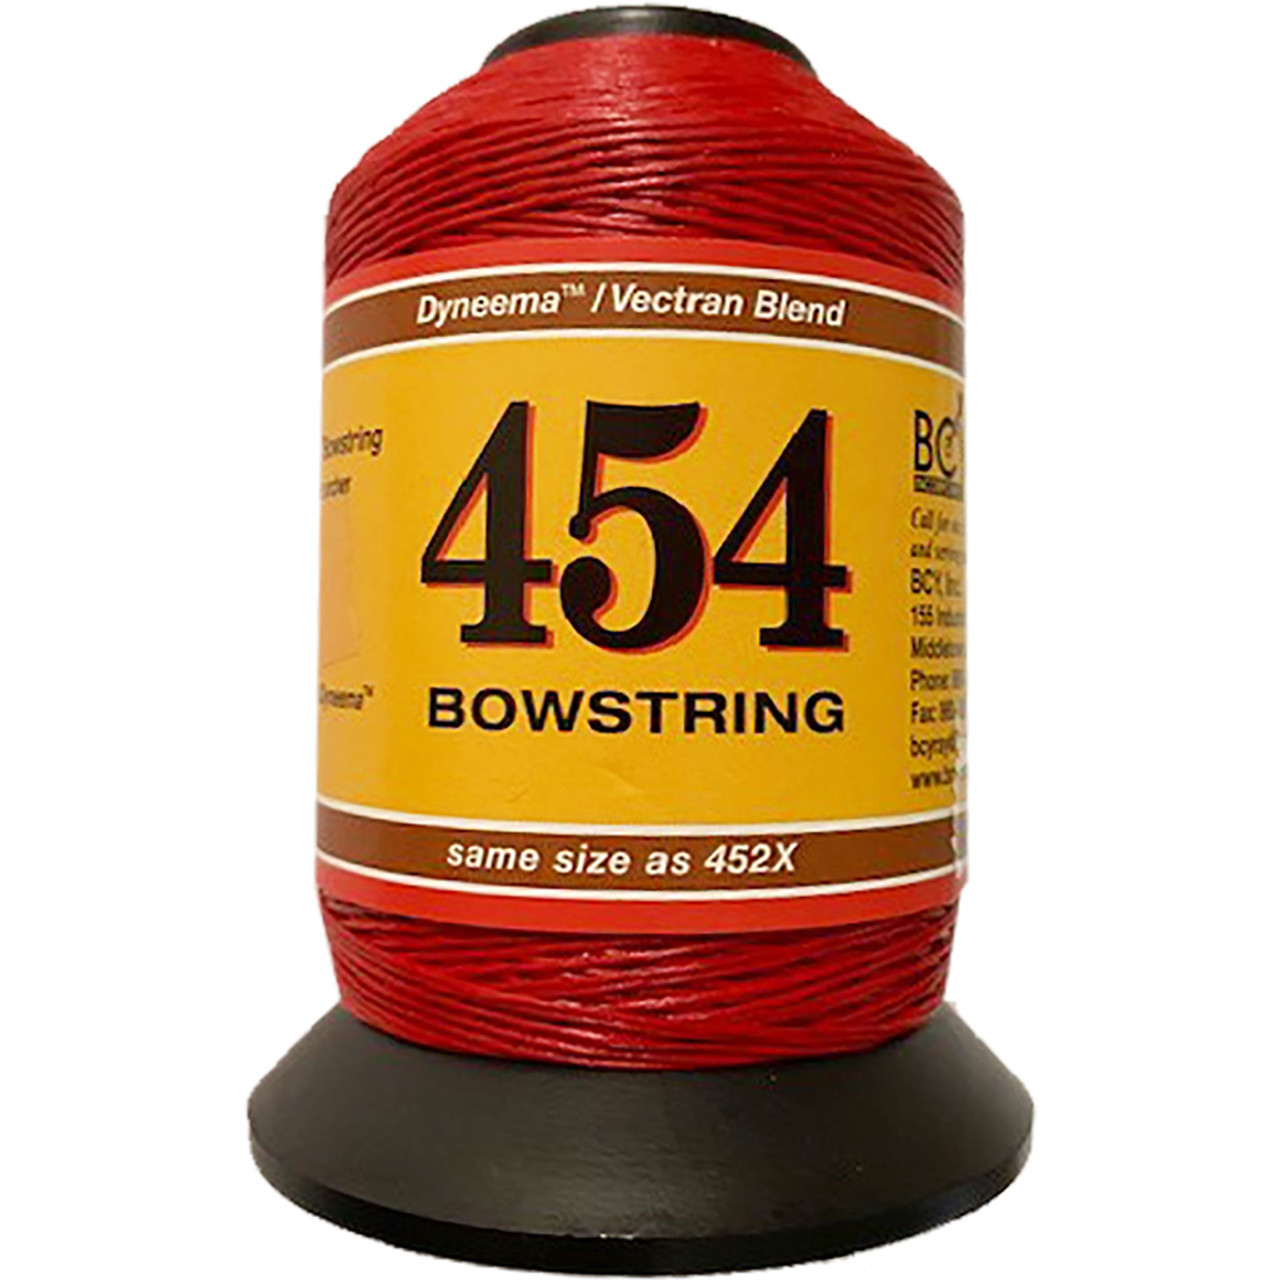 BCY 454 Bowstring Material Royal Blue 1/4 lb